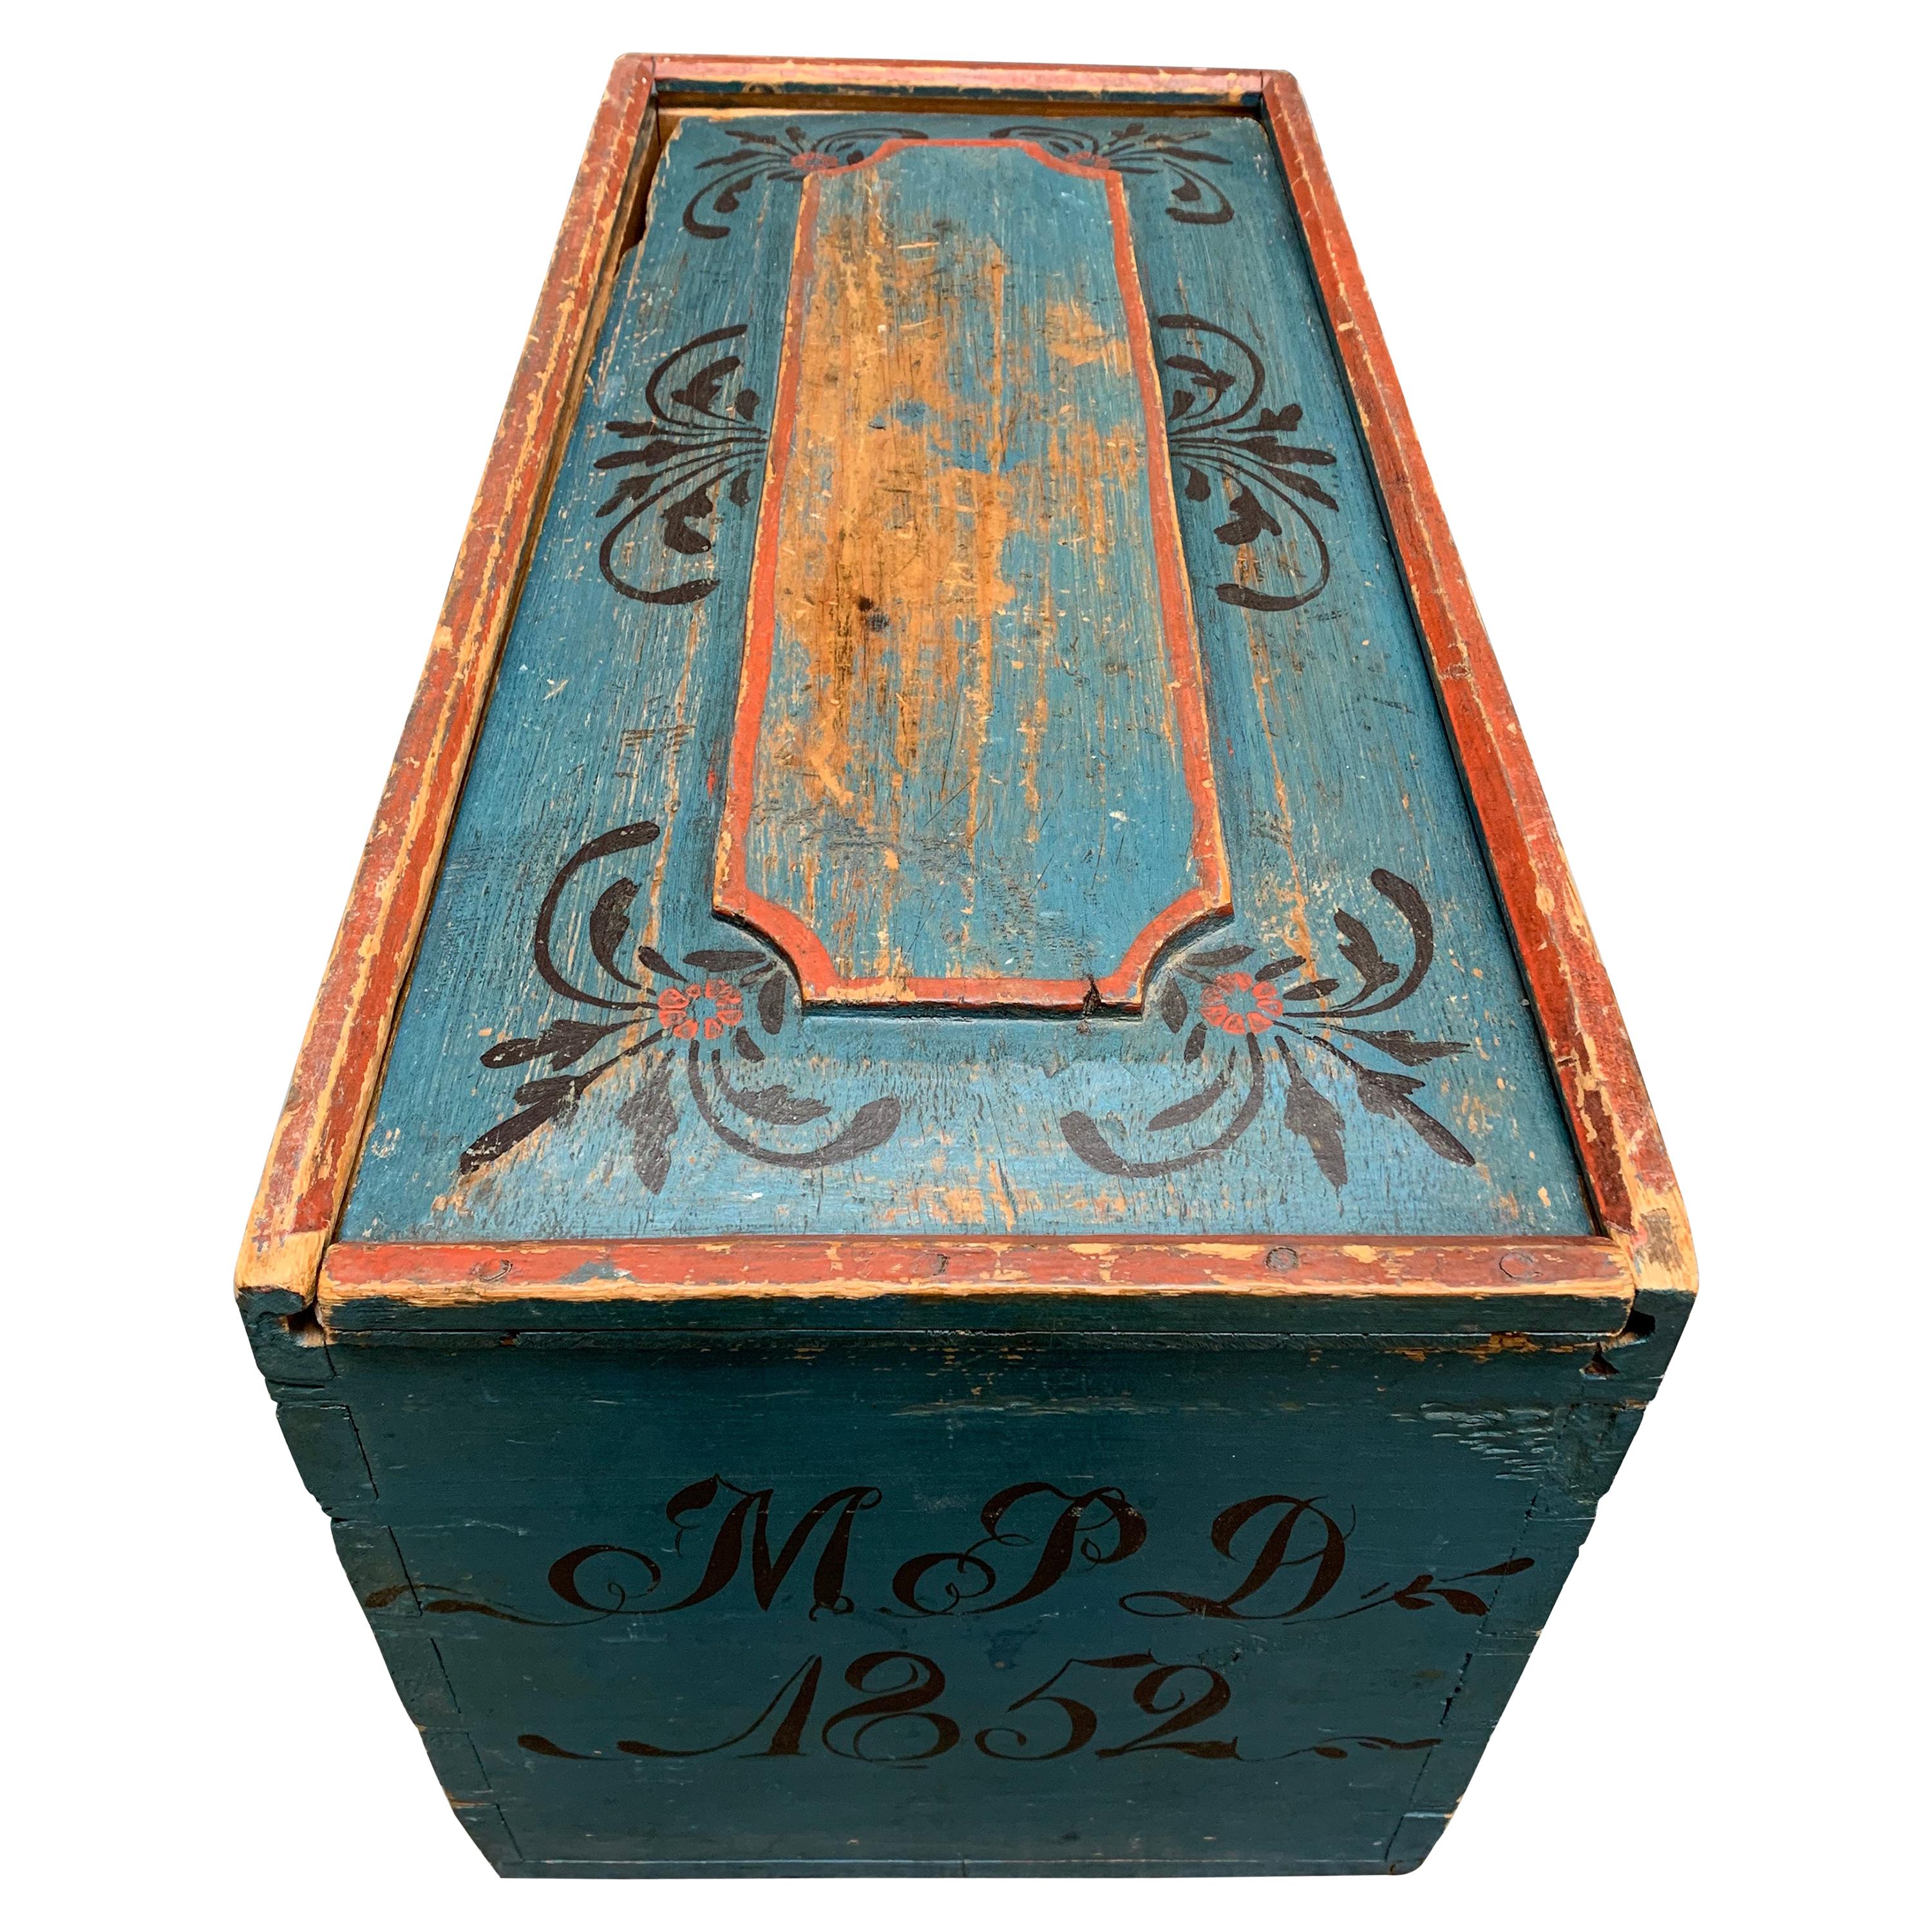 Original Blue and Red Painted Swedish Bridal Folk Art Box Dated 1852